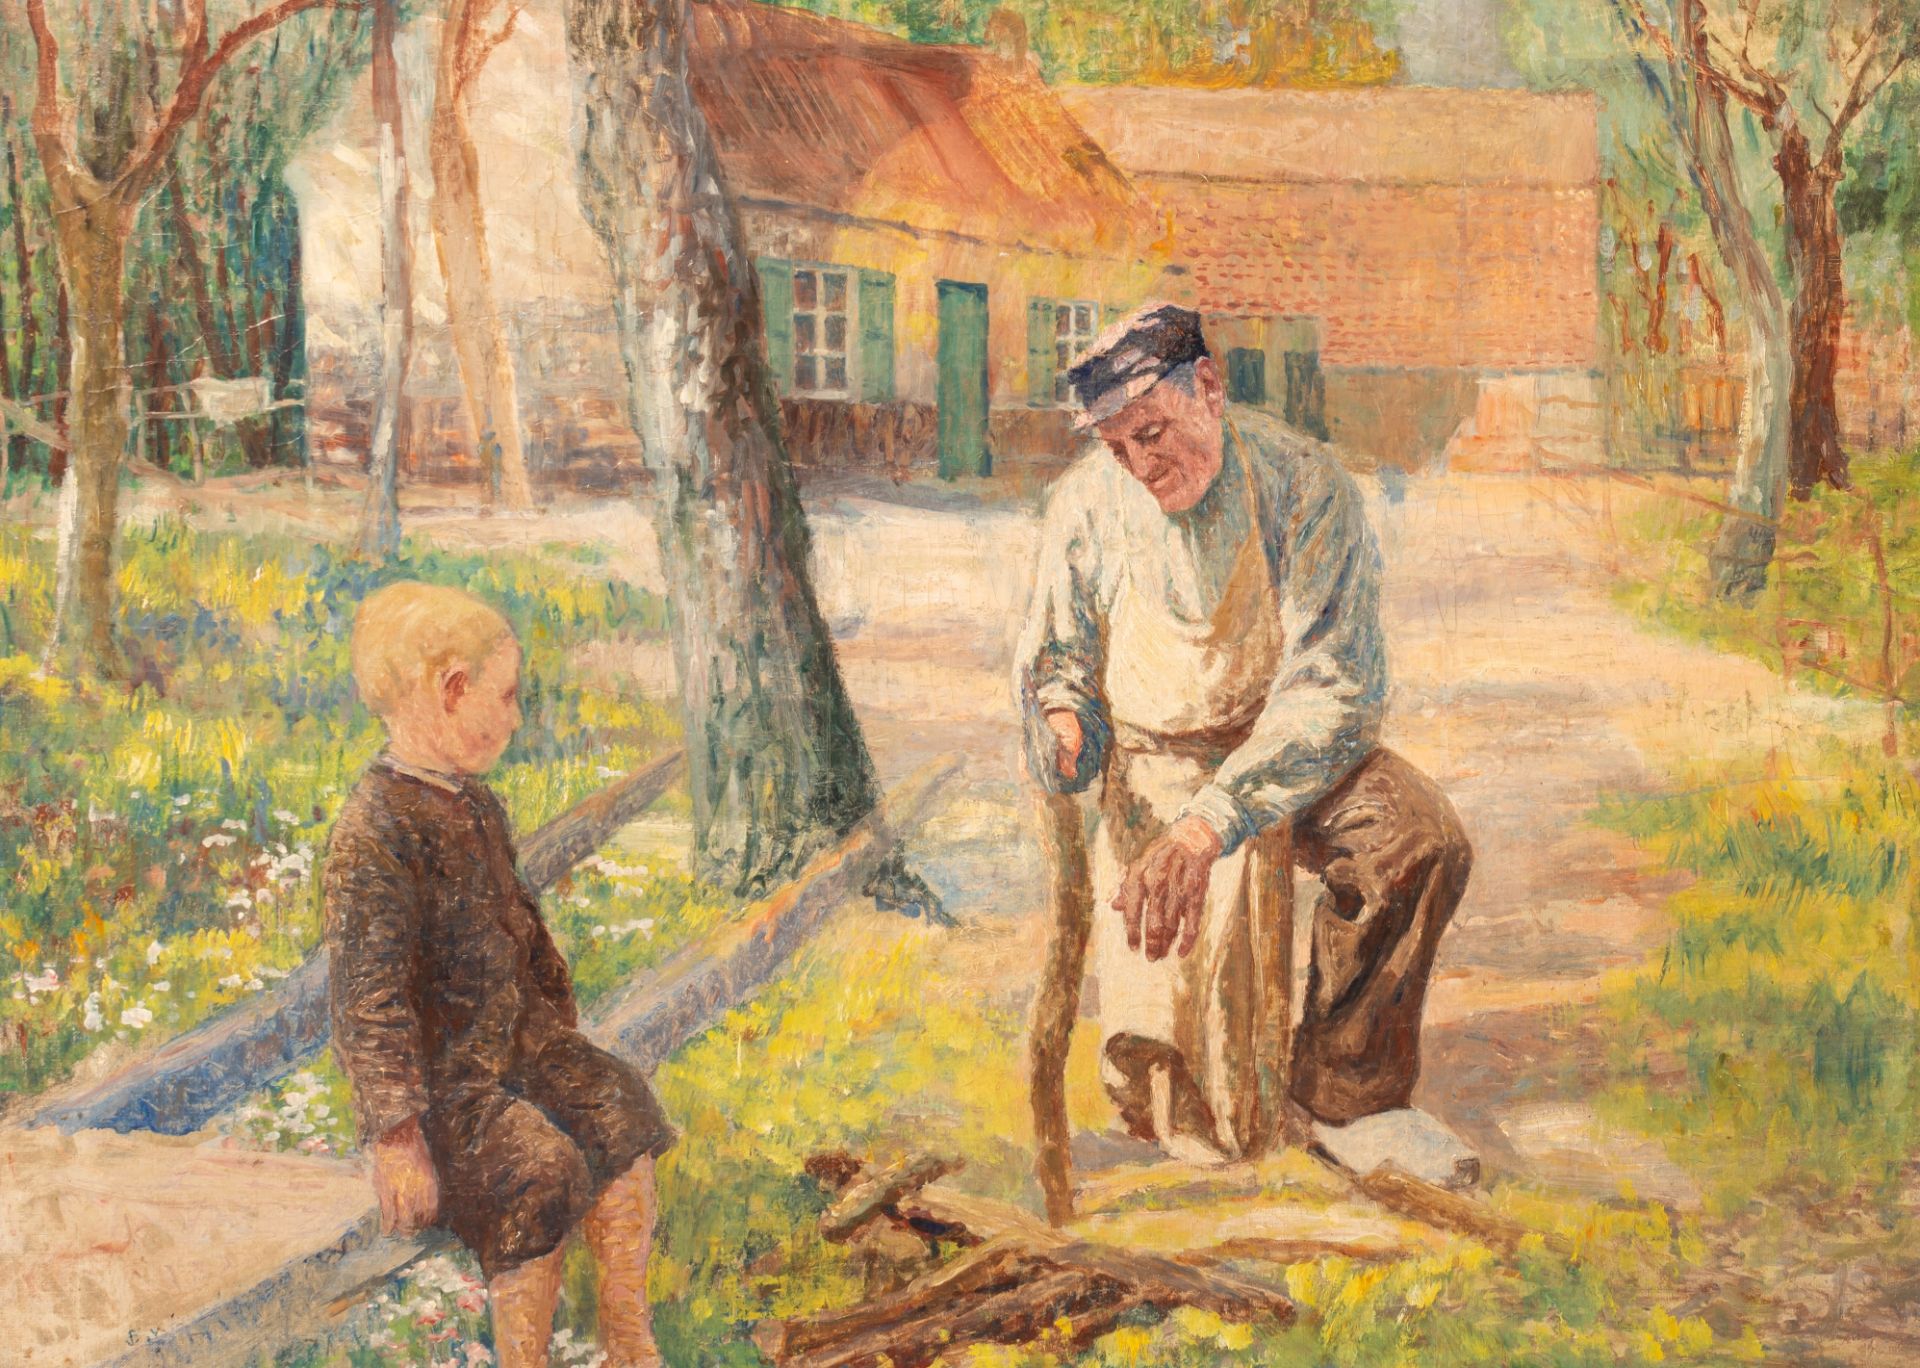 Emiel Jan Van Cauwelaert (1860-1907), grandfather and his grandson, oil on canvas 66 x 90 cm. (25.9